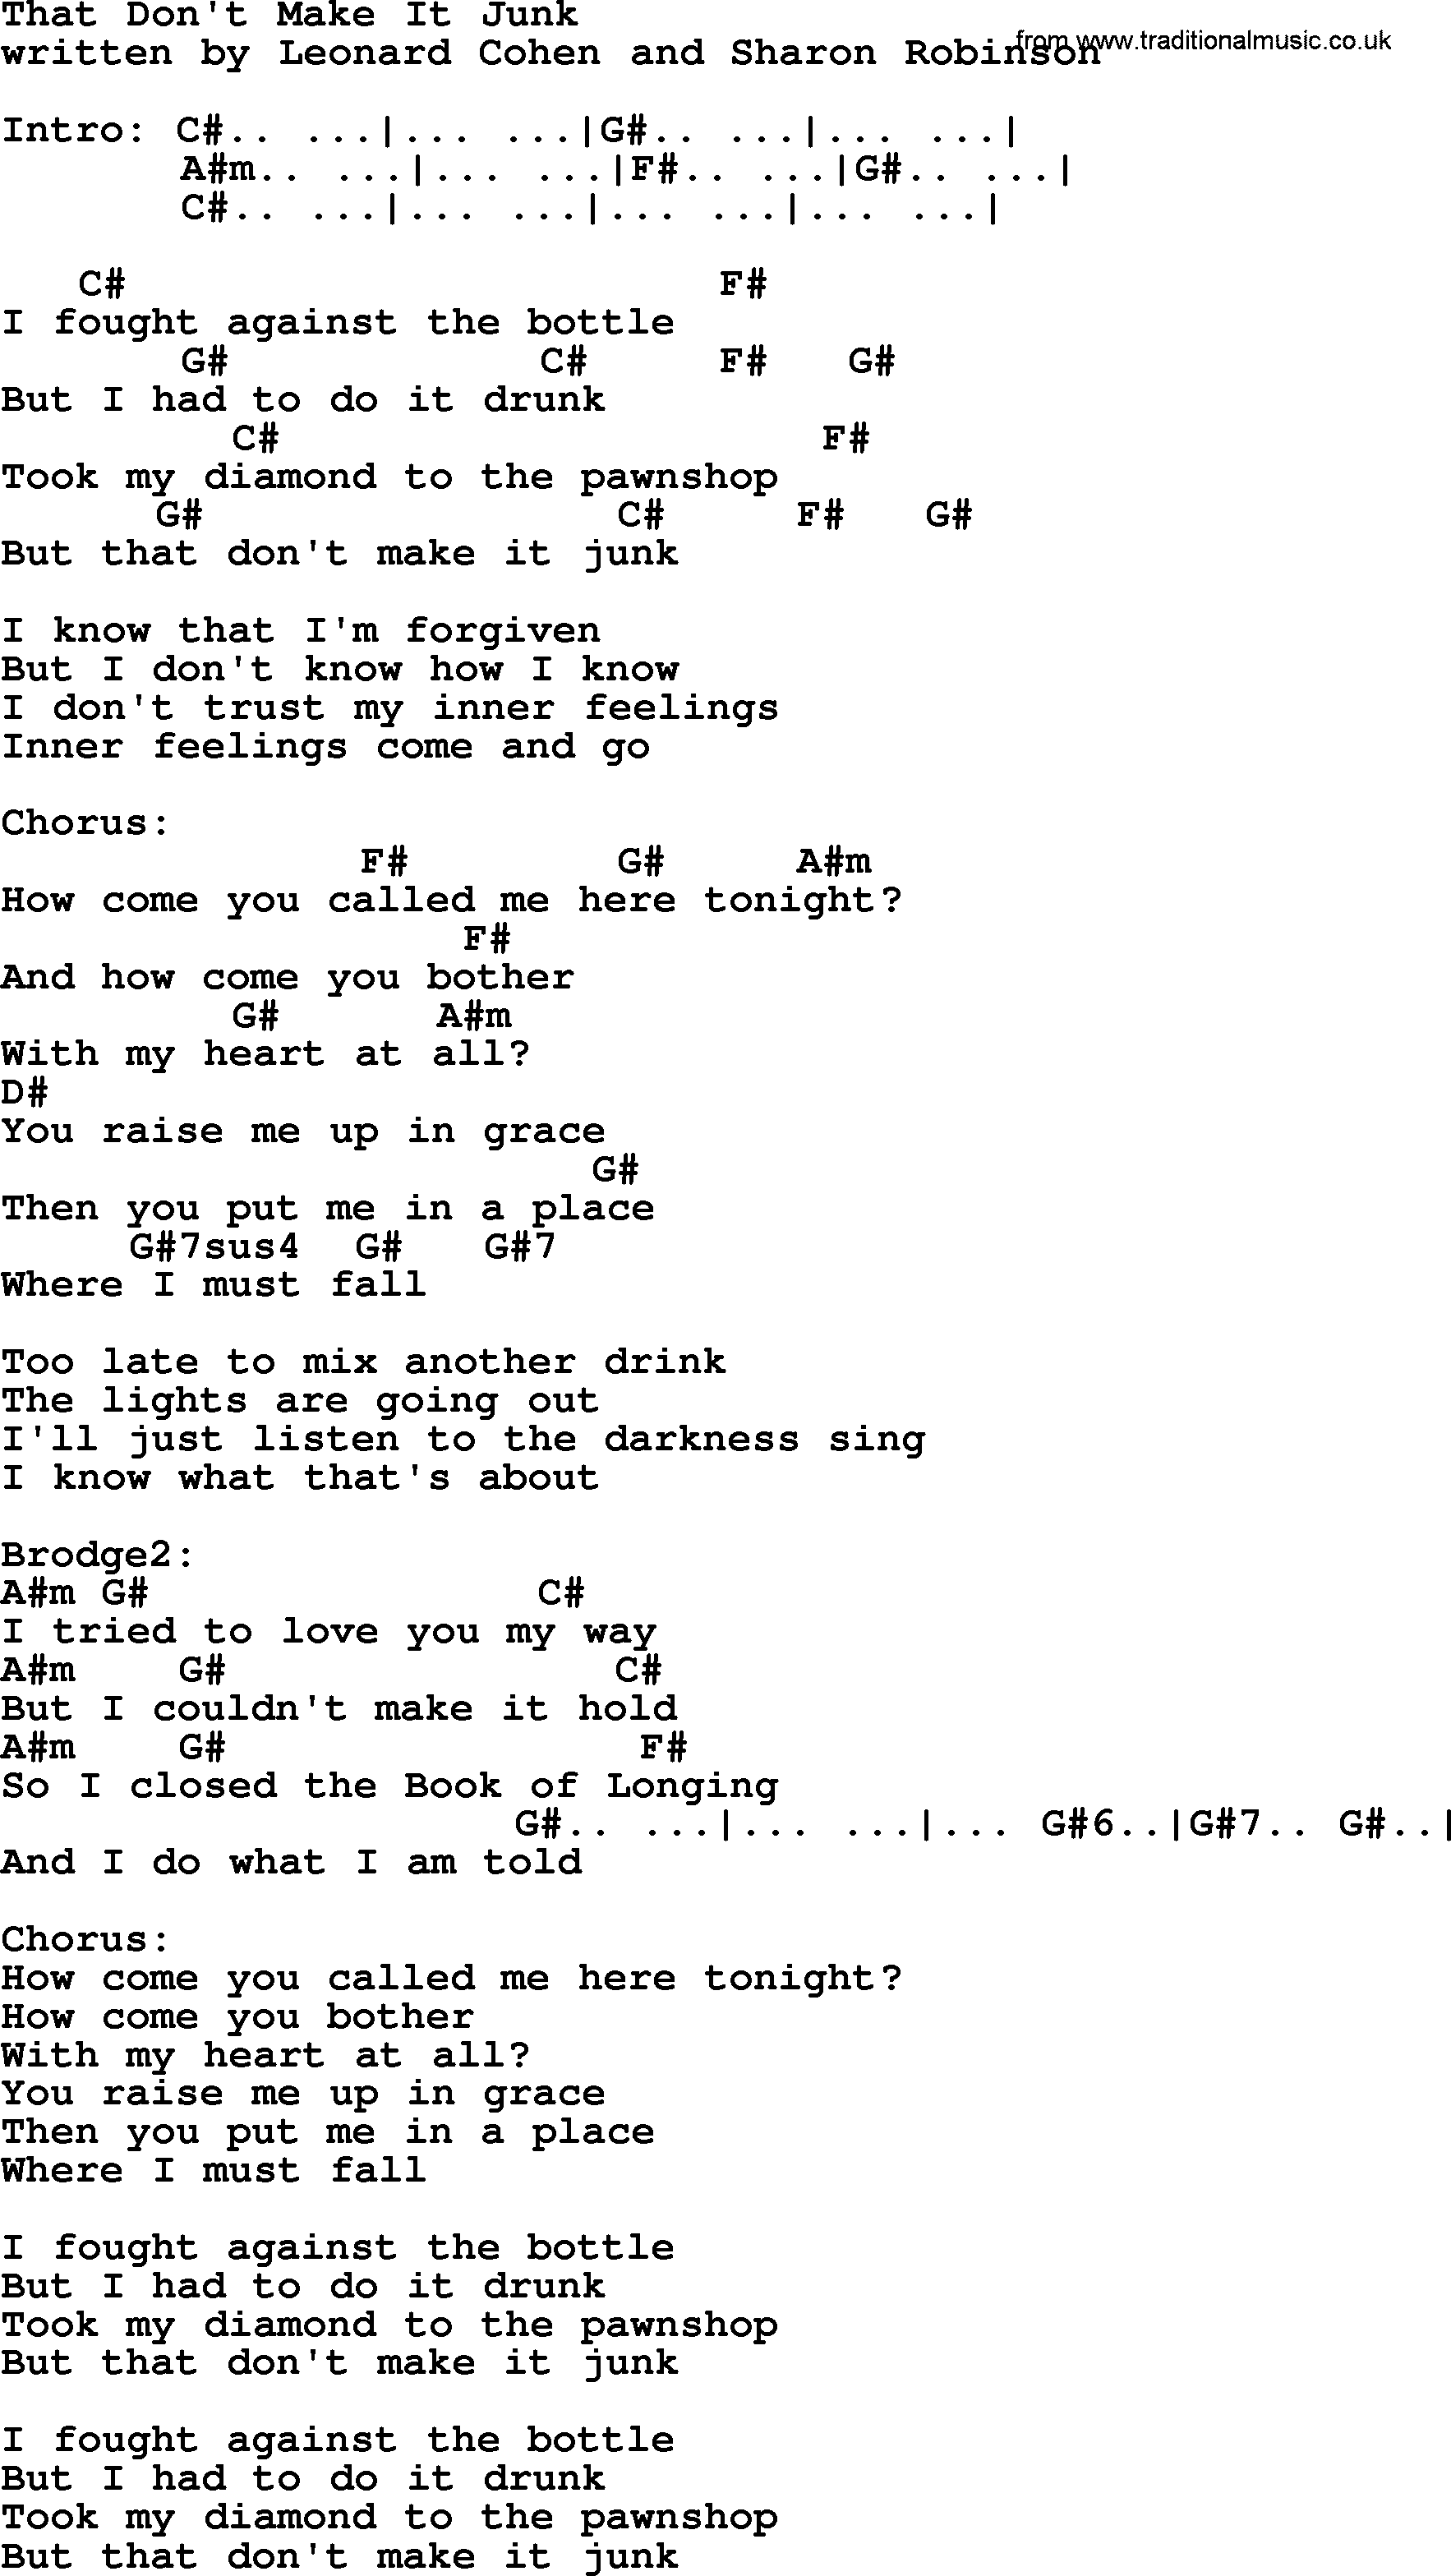 Leonard Cohen song That Dont Make It Junk, lyrics and chords